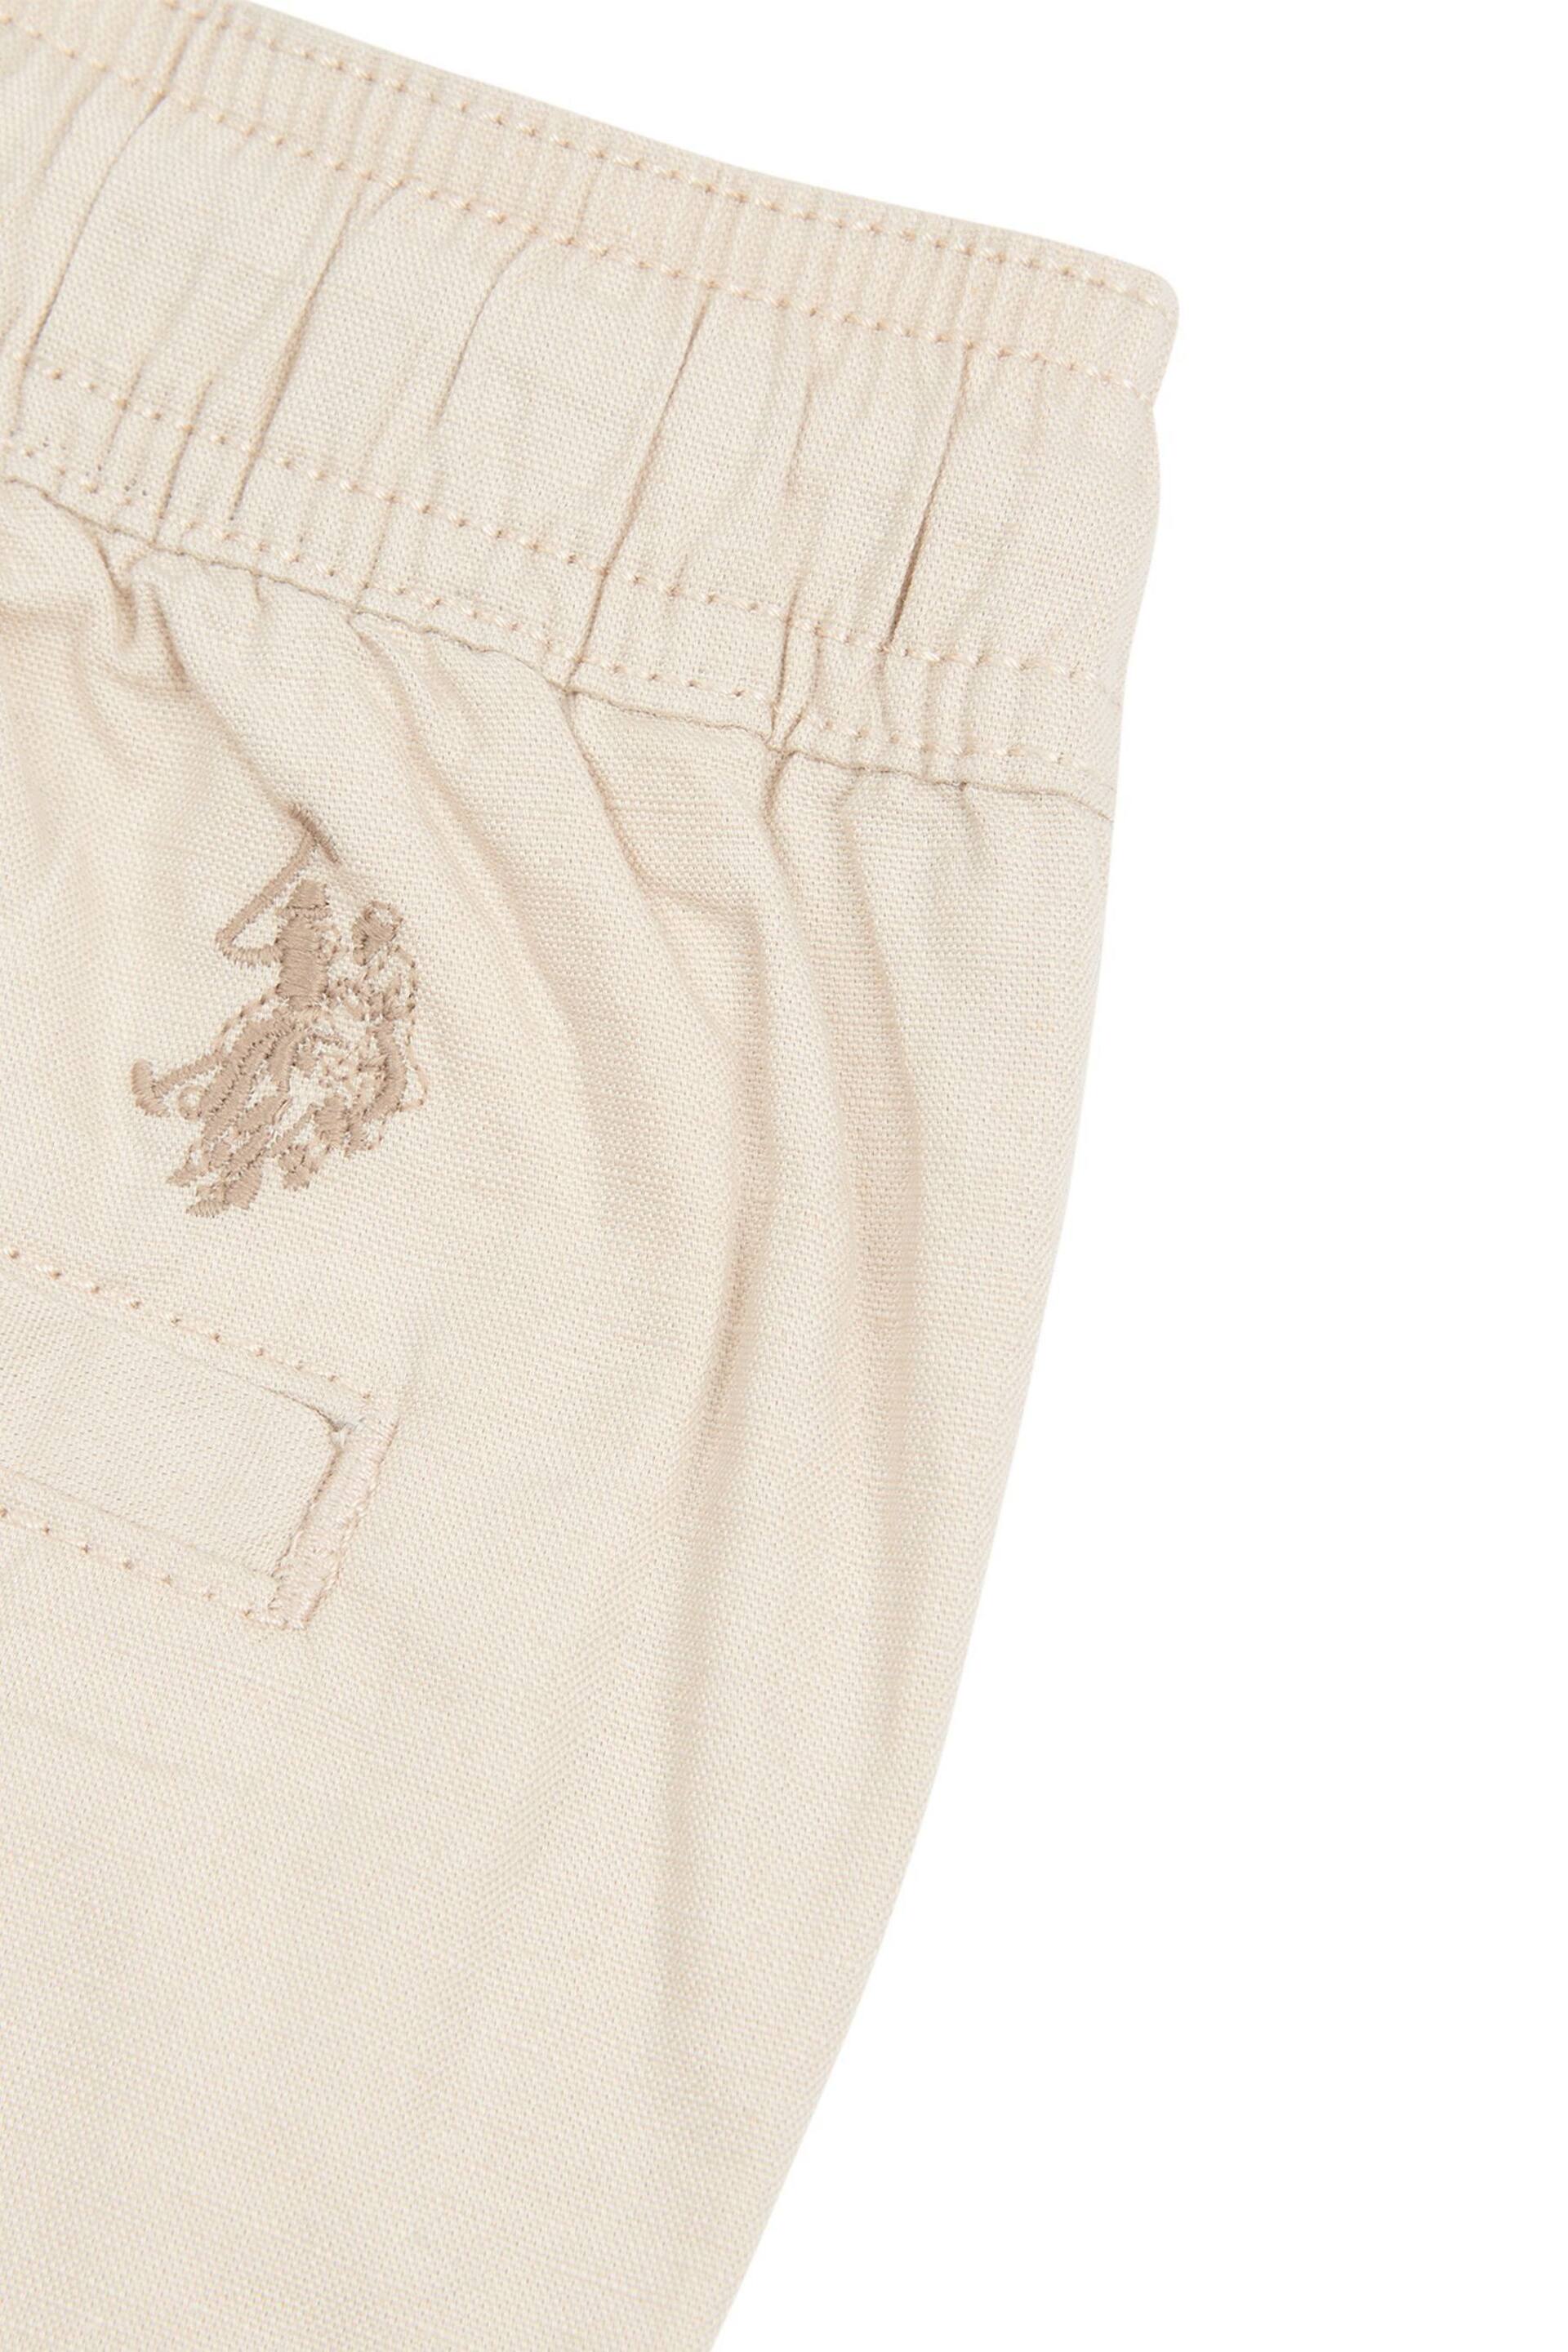 U.S. Polo Assn. Boys Linen Blend Deck Cream Shorts - Image 2 of 4